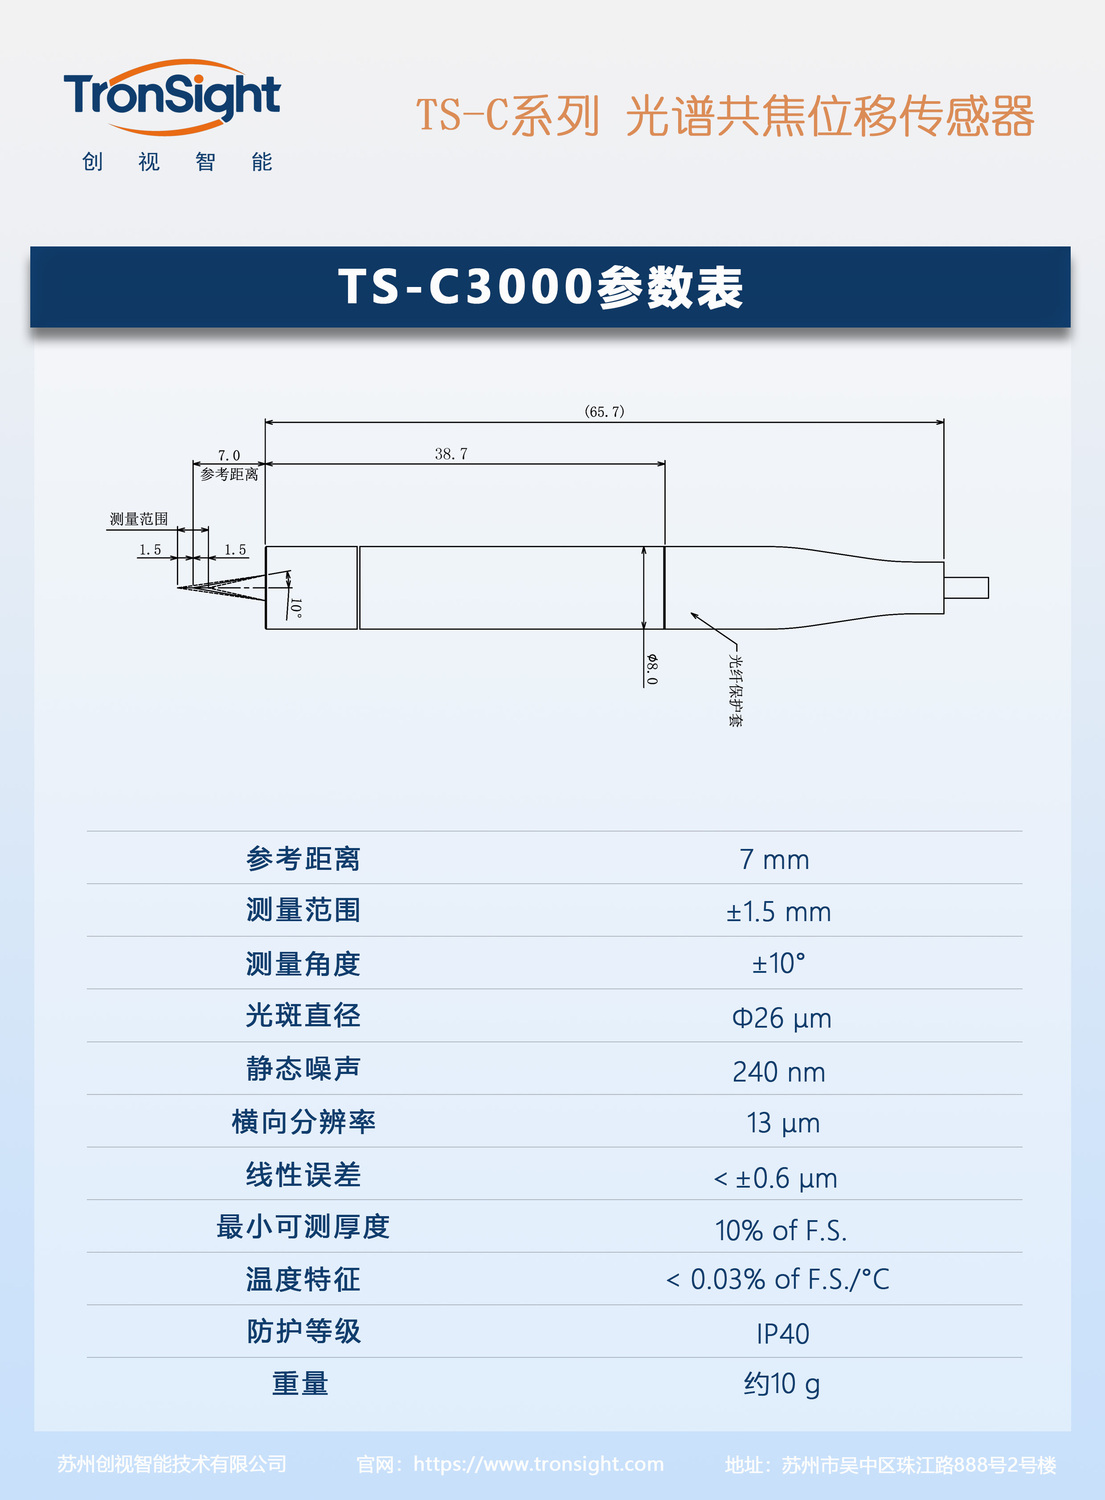 TS-C3000.jpg